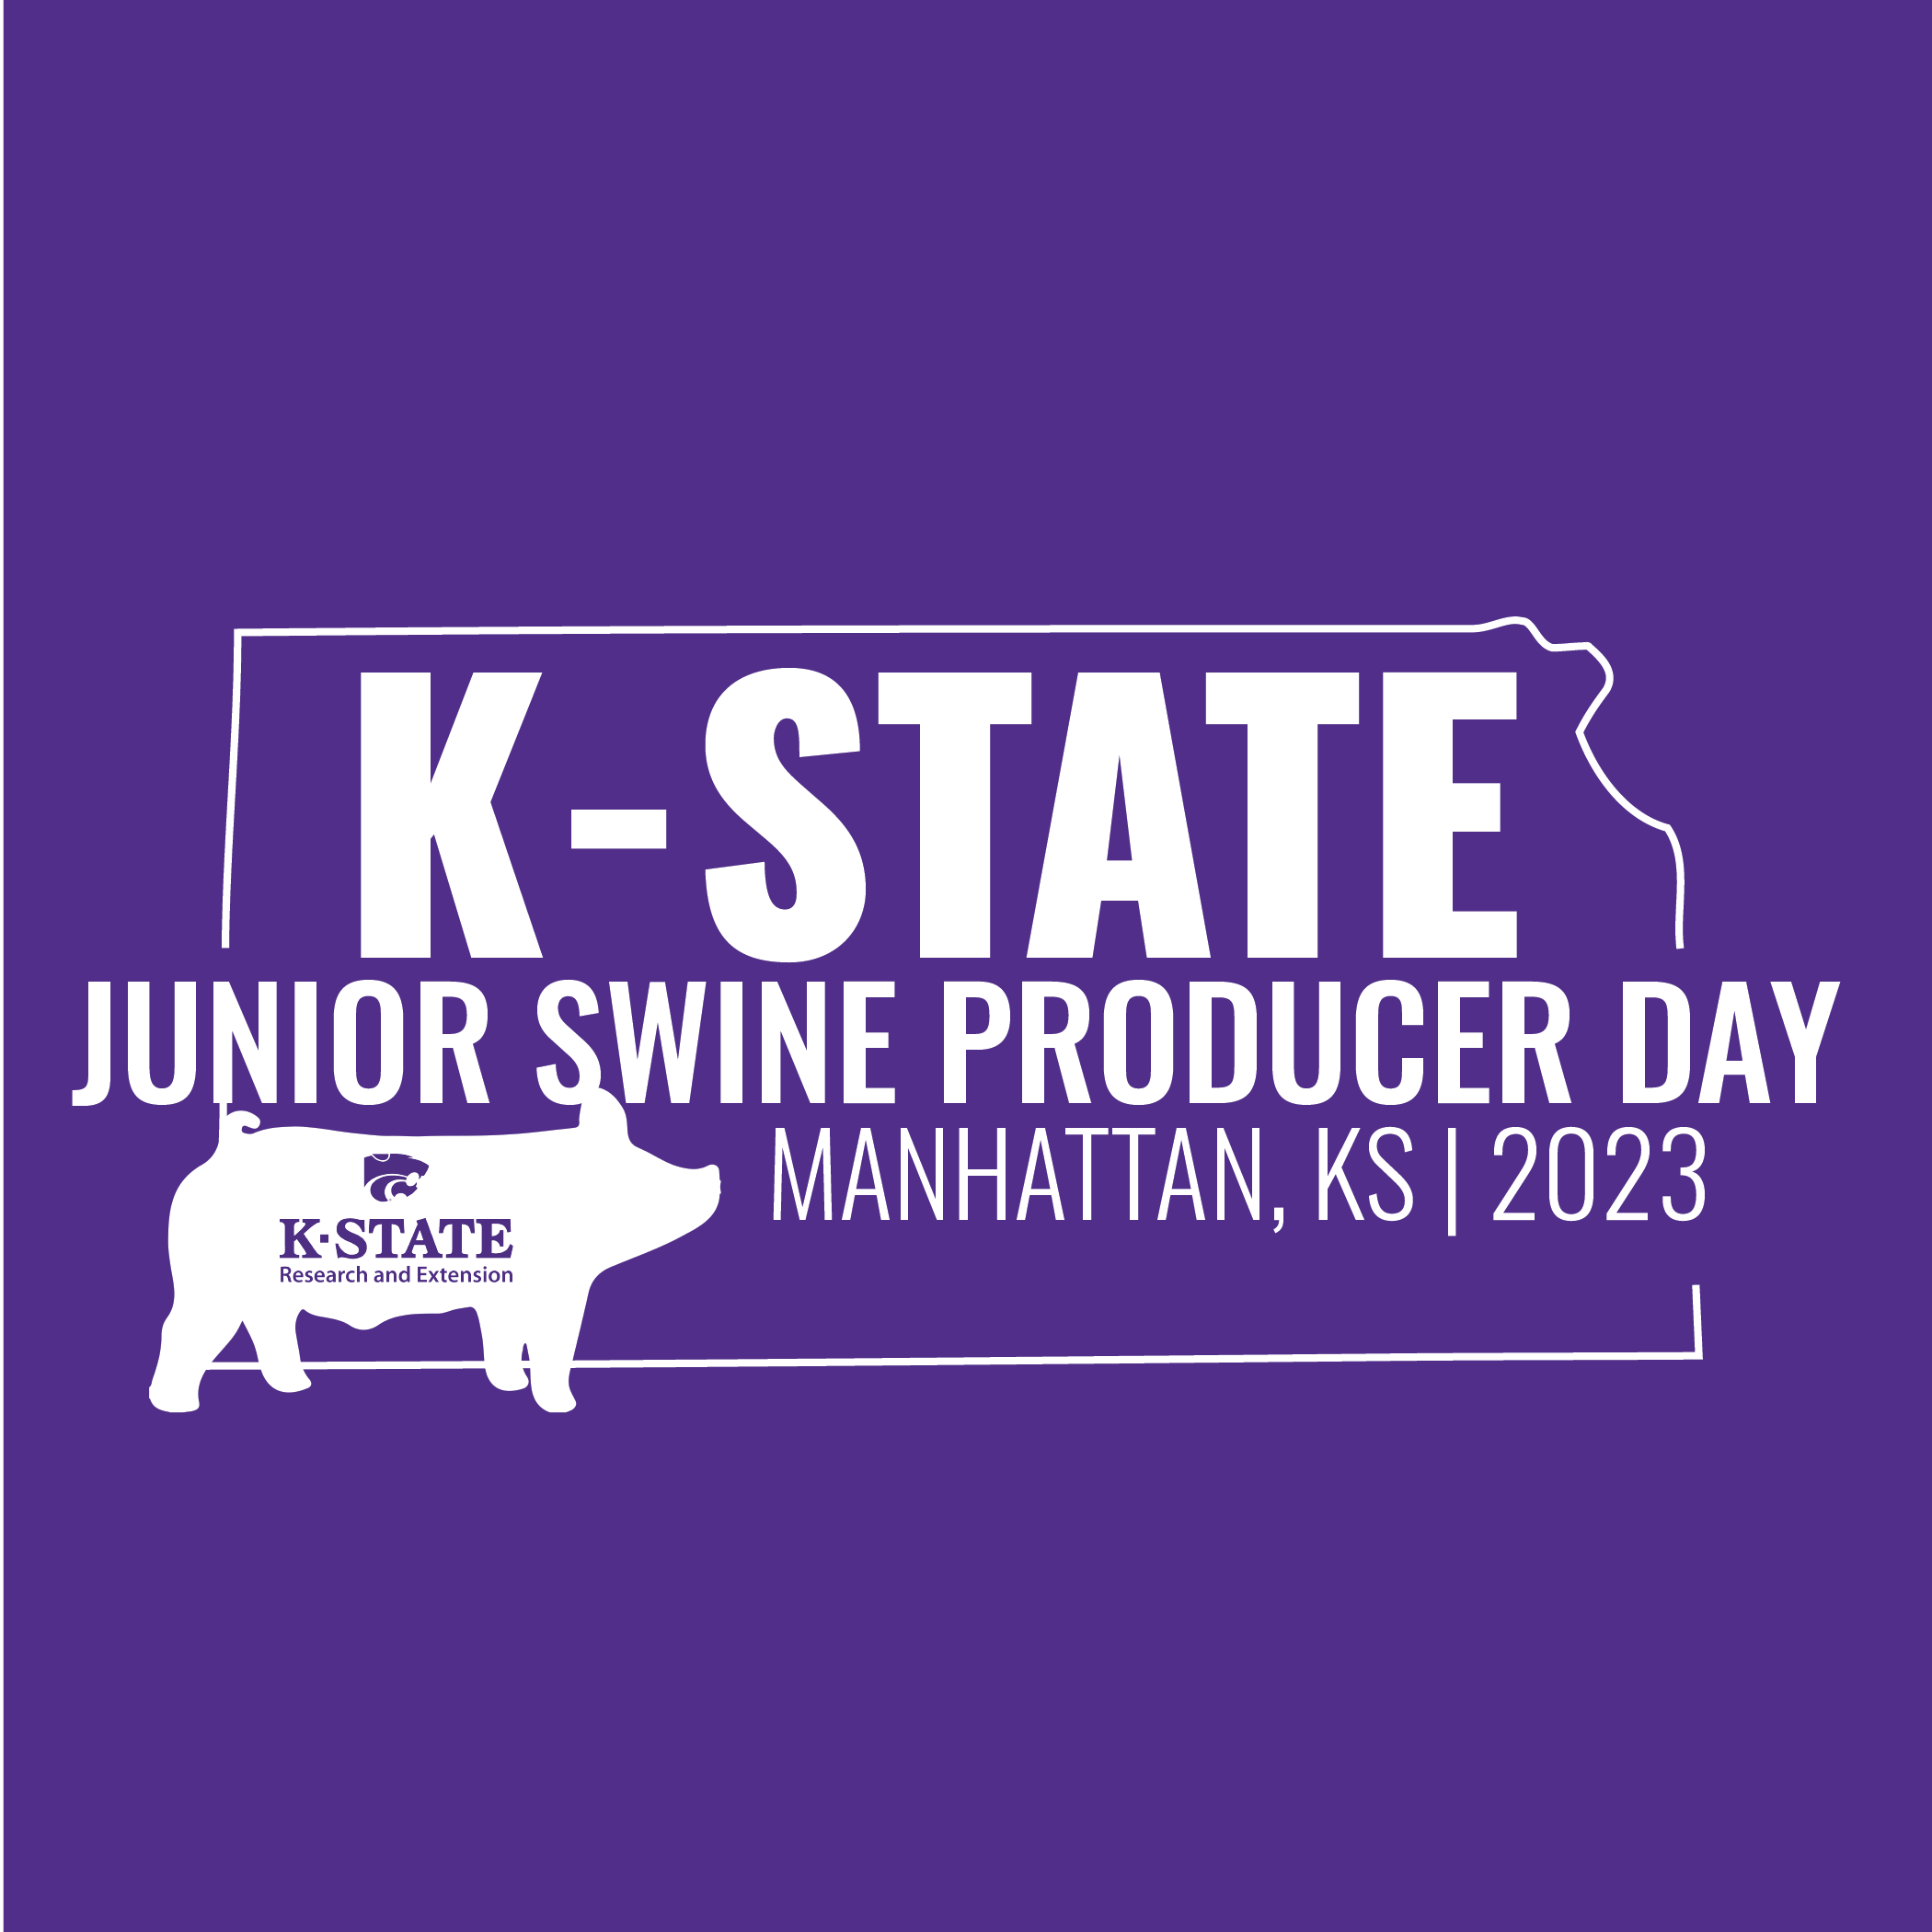 K-State Junior Swine Producer Day T-shirt design